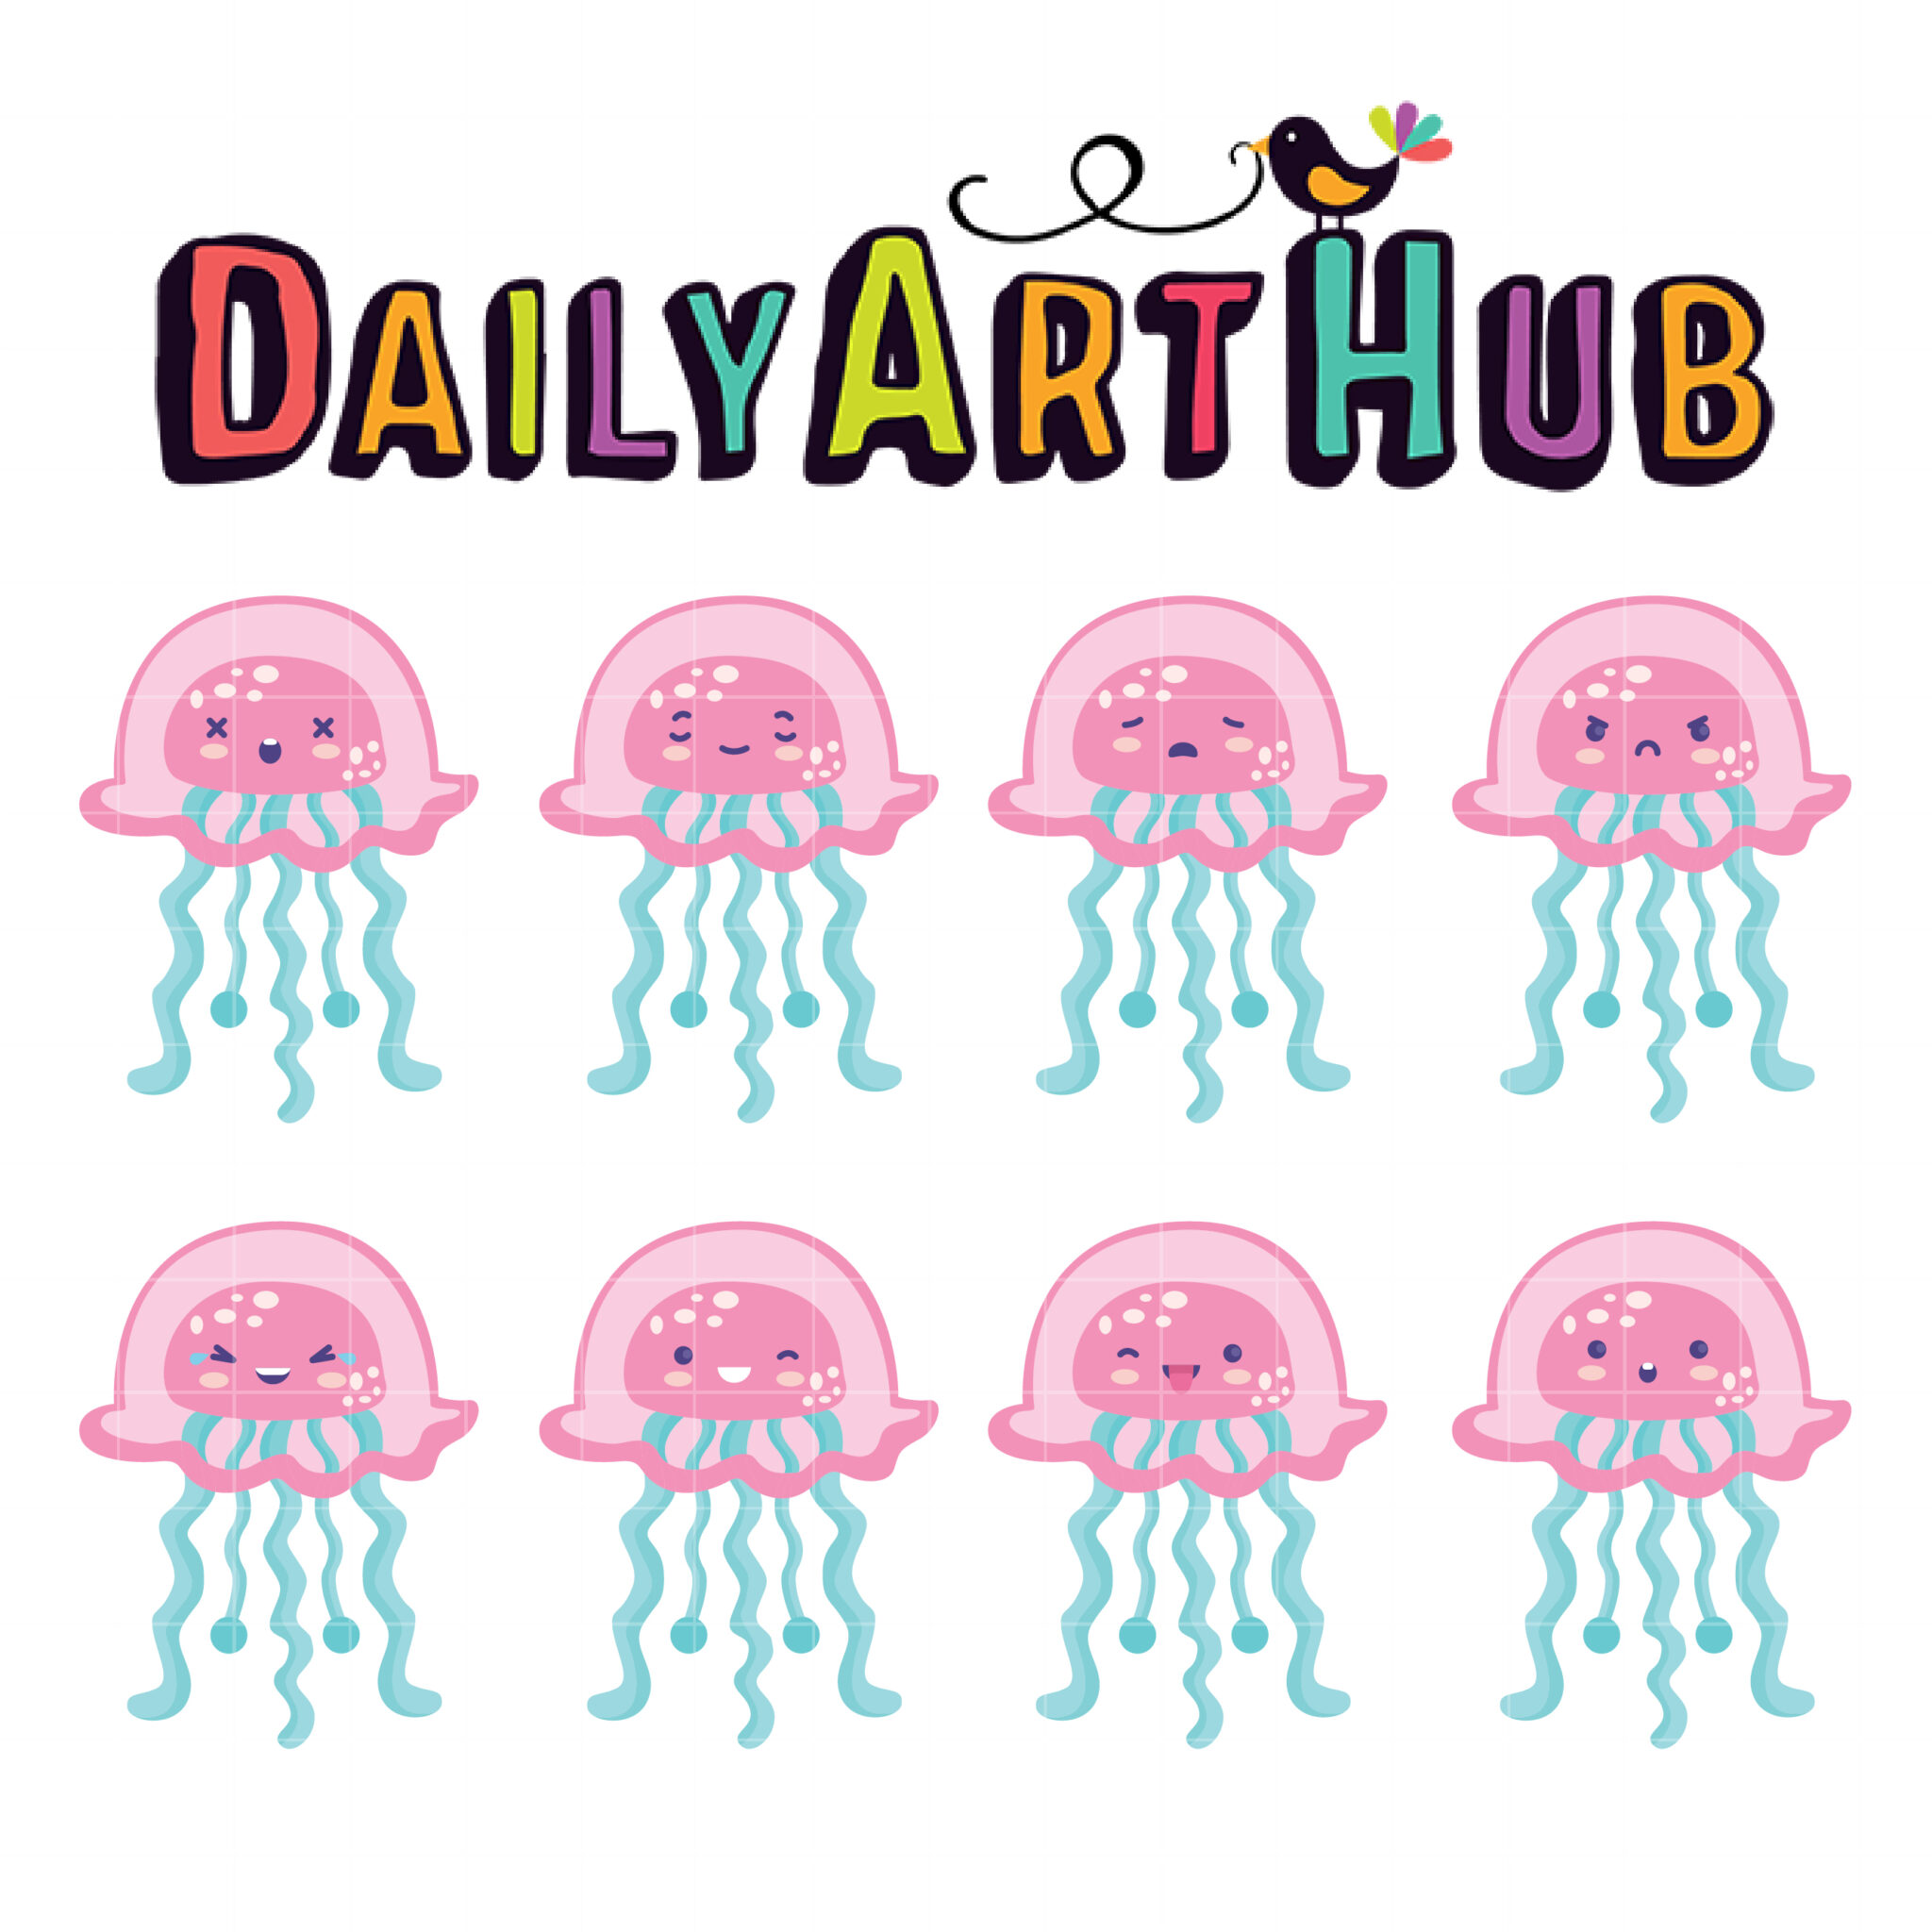 cute jellyfish clip art